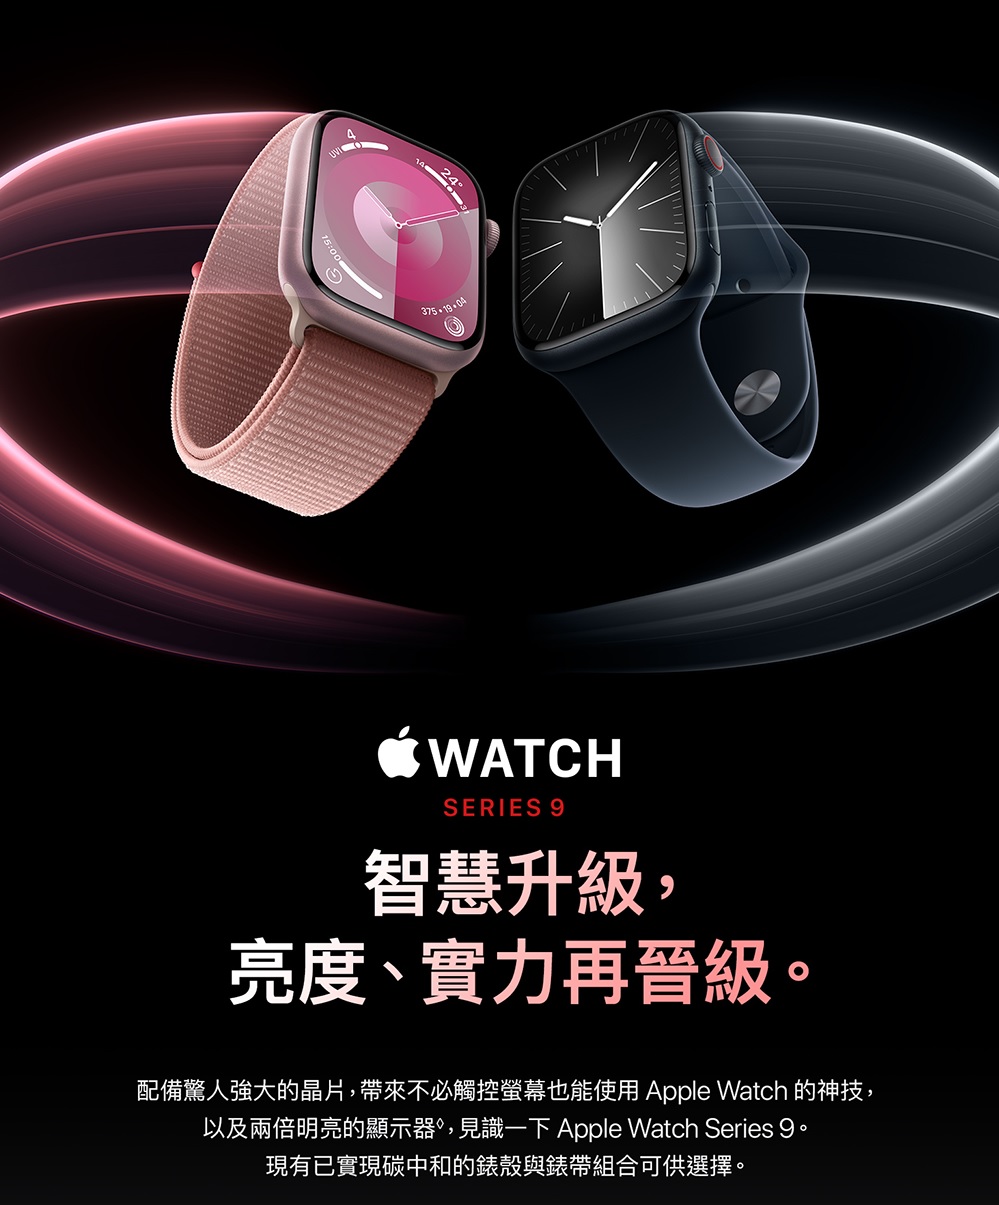 Apple Apple Watch Series 9 GPS